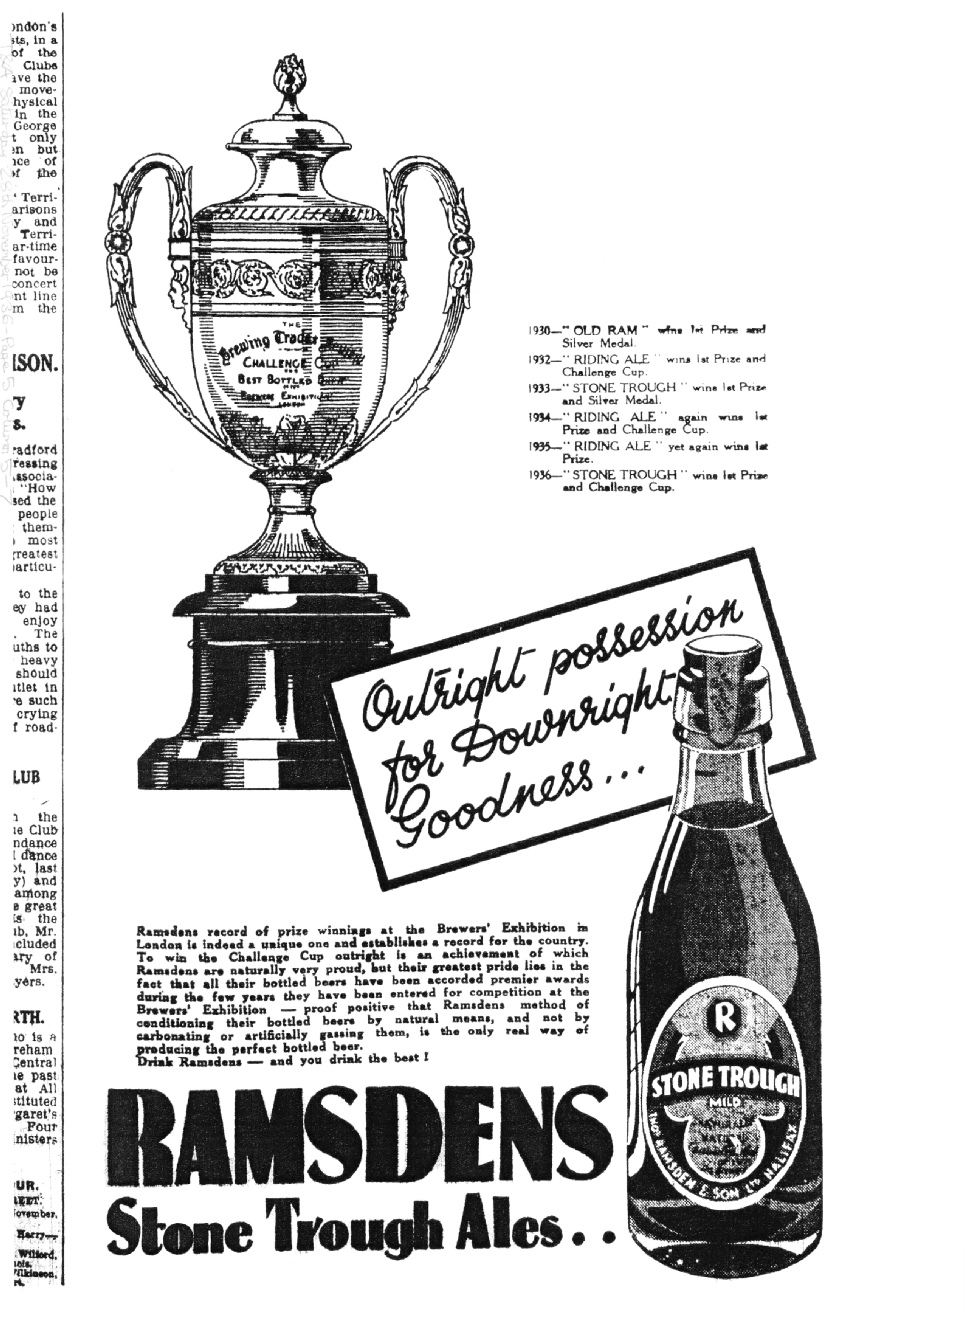 Telegraph & Argus Ramsden advert 1936